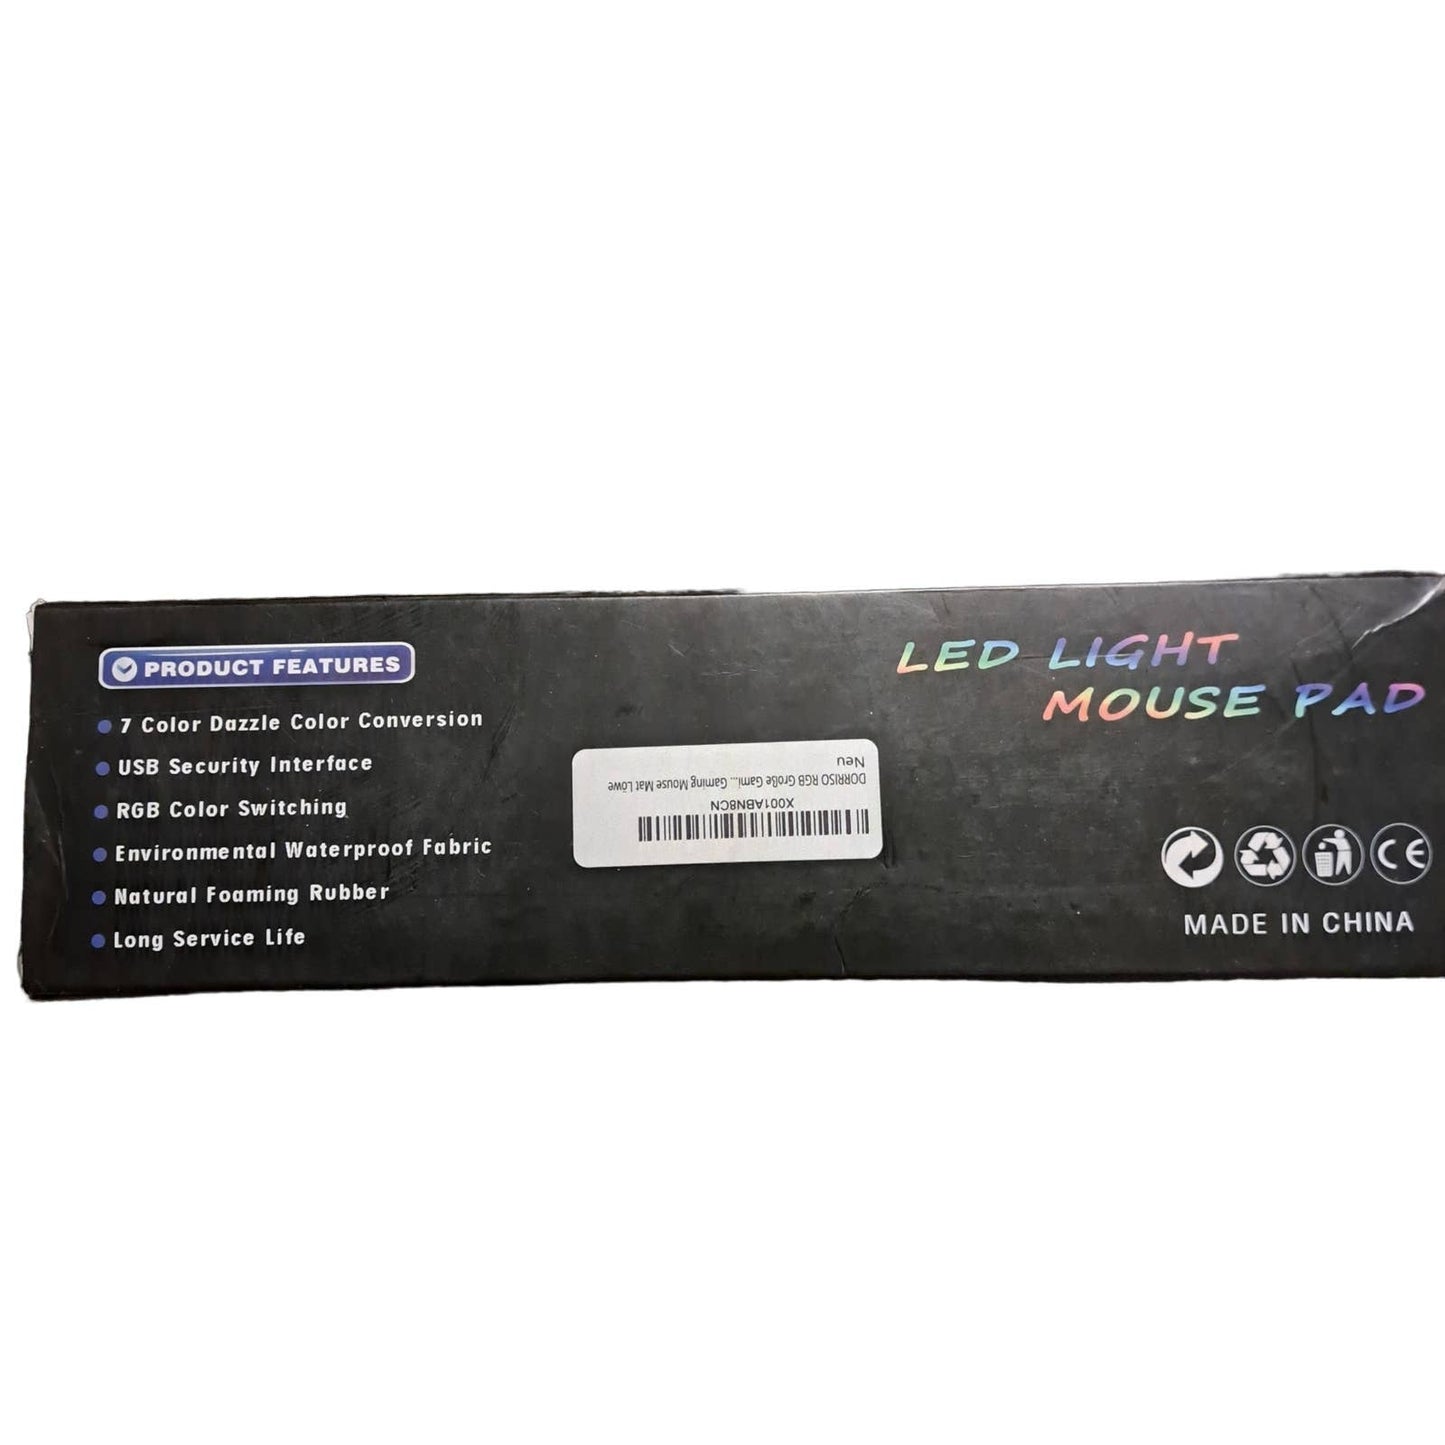 NIB - Gaming LED 31 inch Long Light Up Multi Color Gaming Pad -Lion